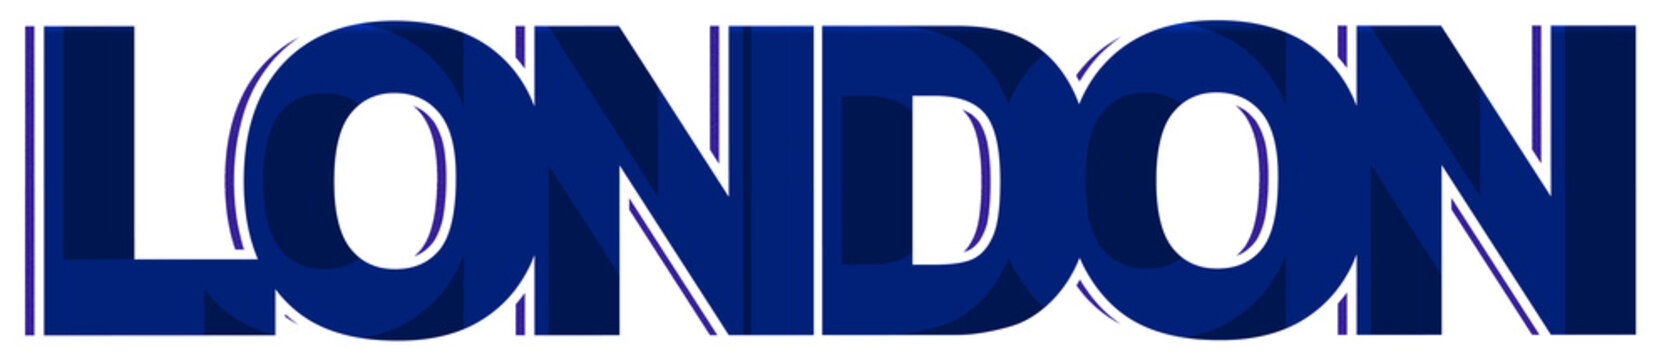 London logo, concept text, creative design, isolated on white background, illustration